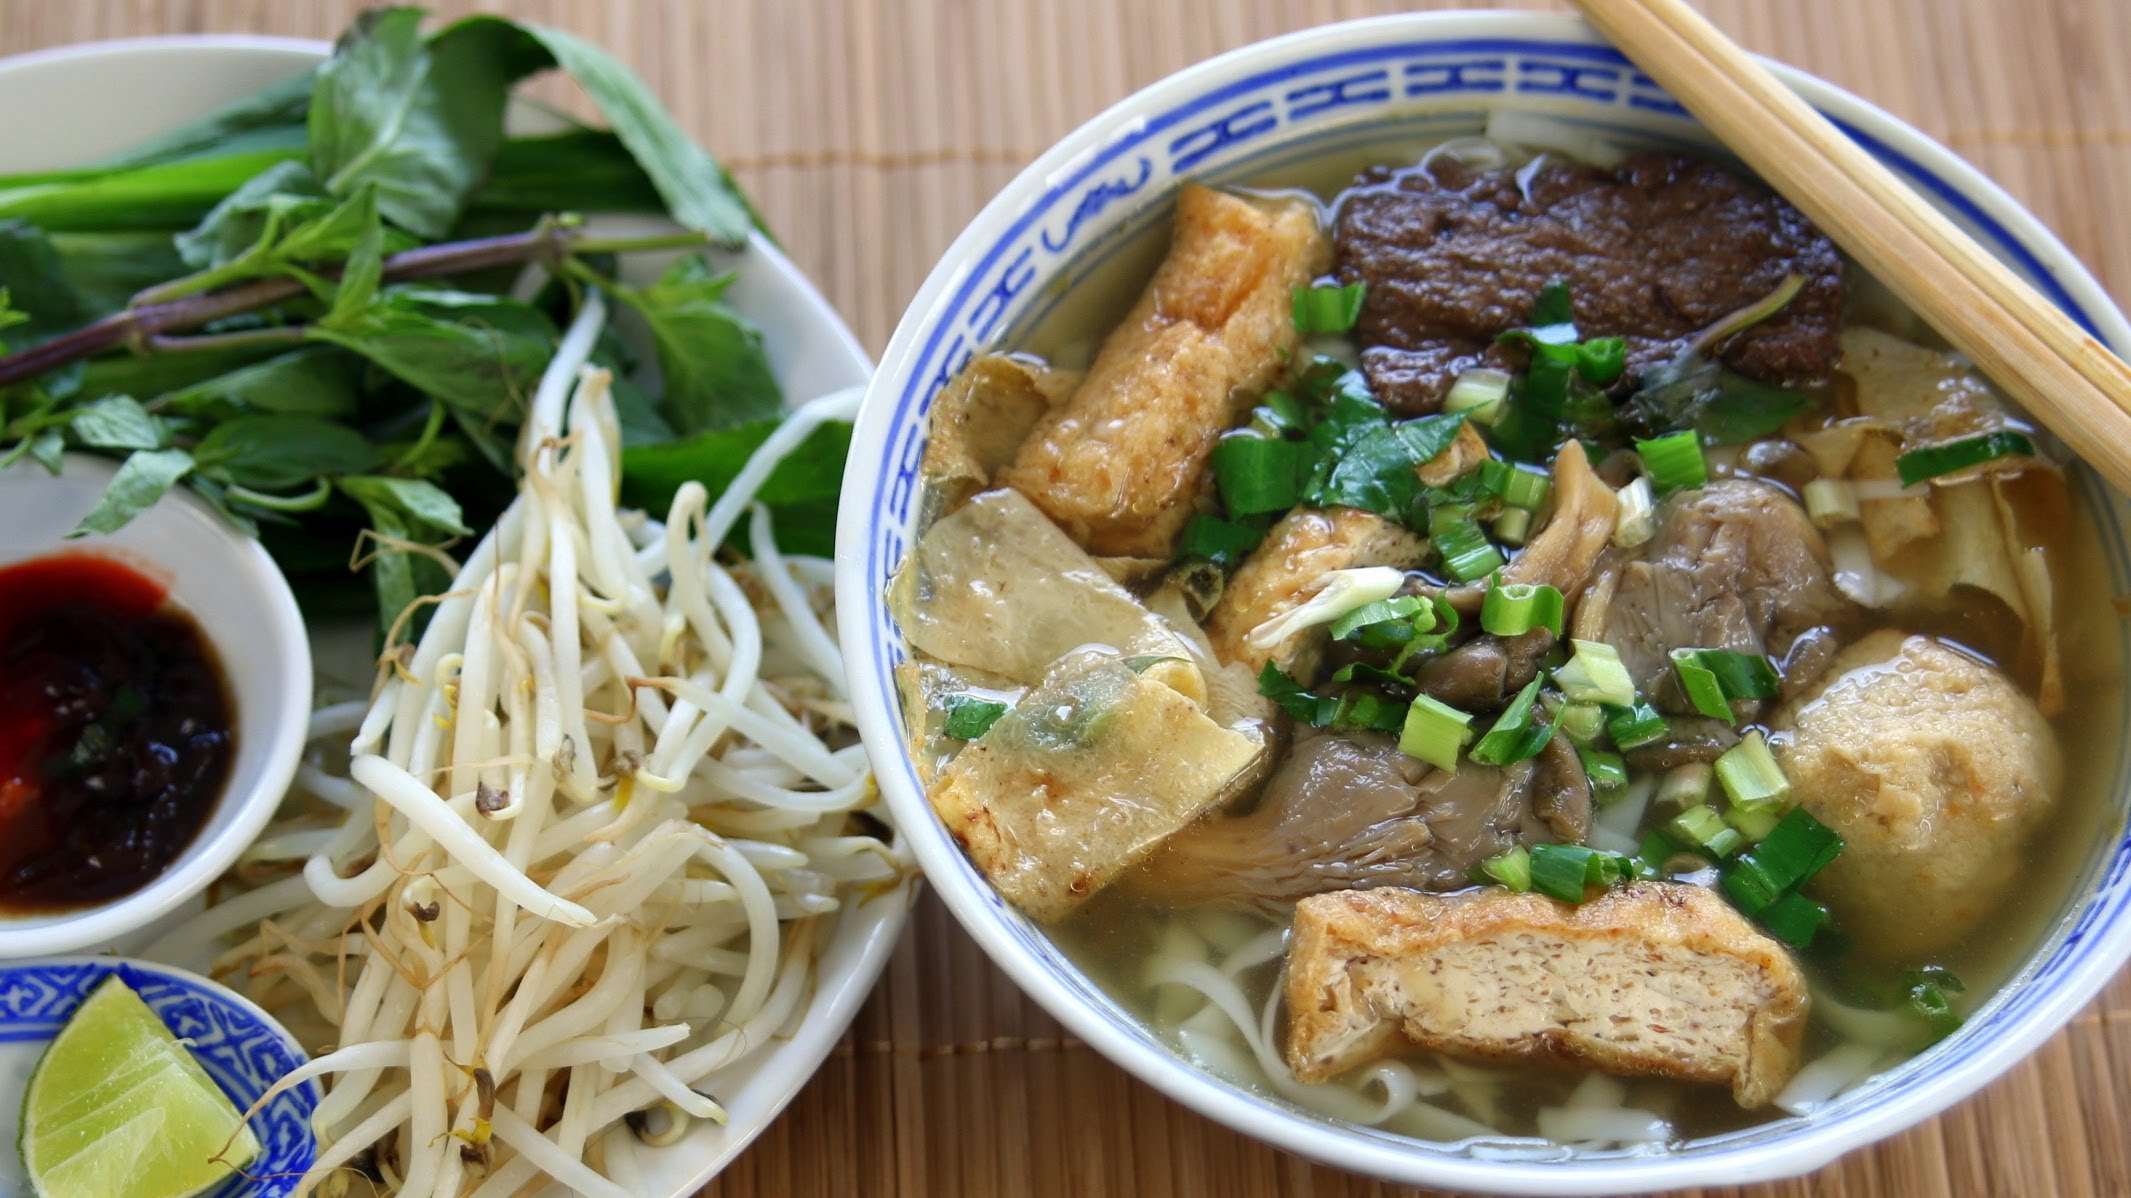 12 Best Vegetarian restaurants in Saigon (Ho Chi Minh City)